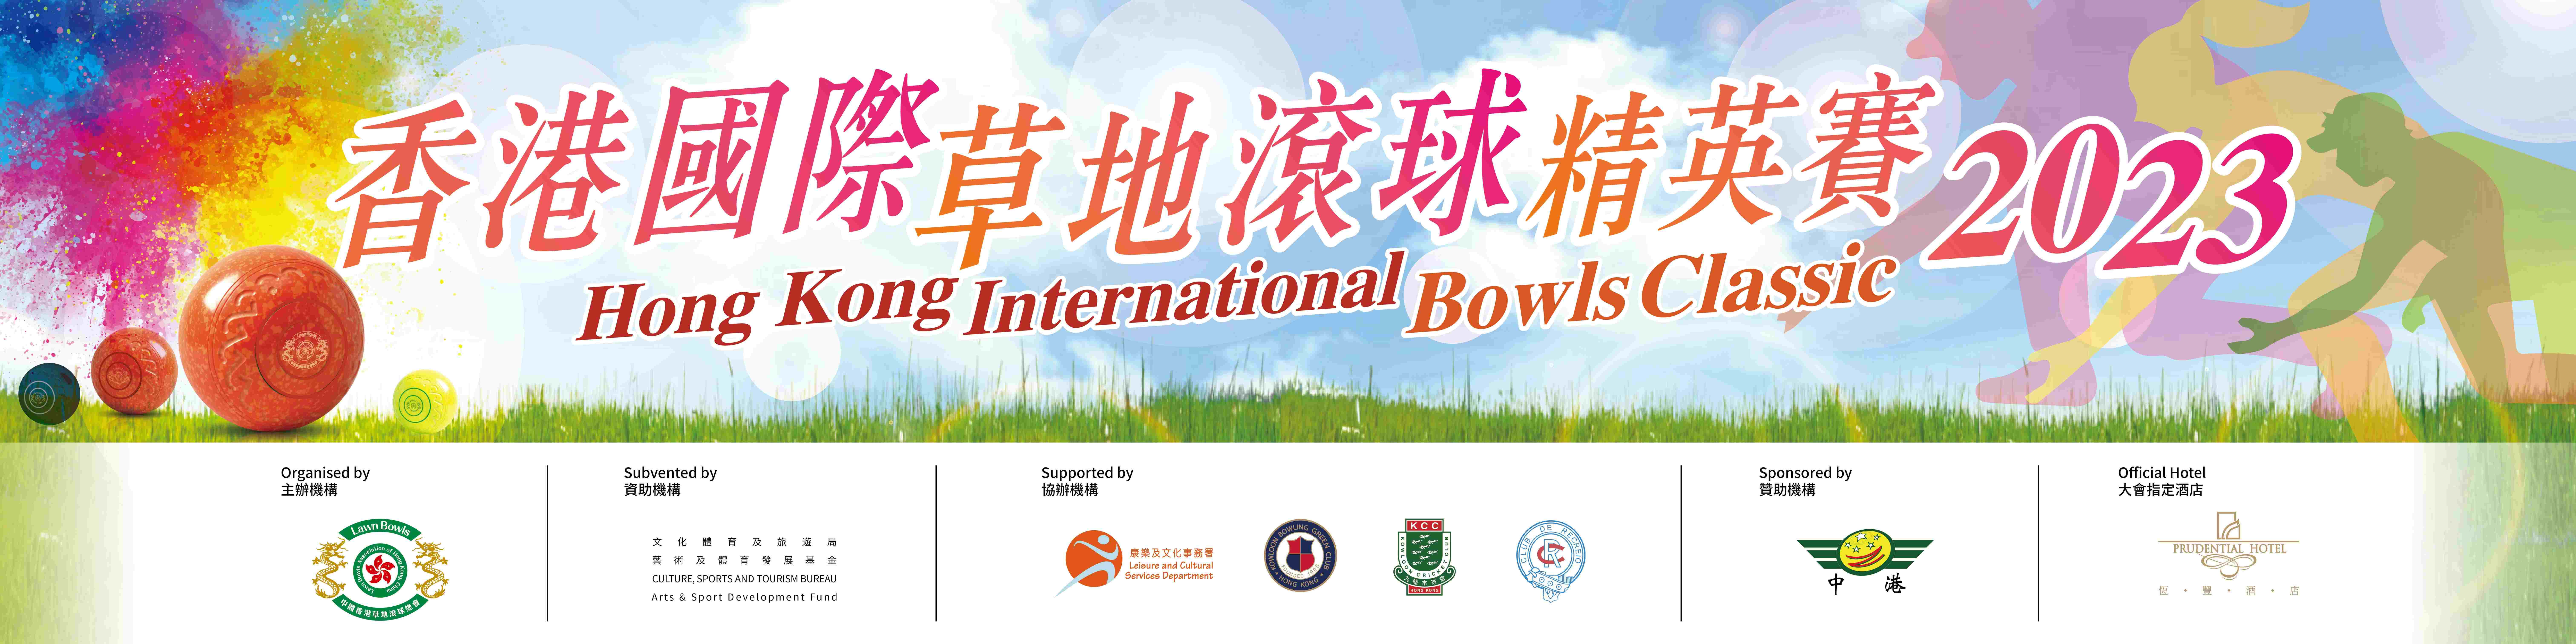 Hong Kong International Bowls Classic 2023 (Updated on 22/11/23)